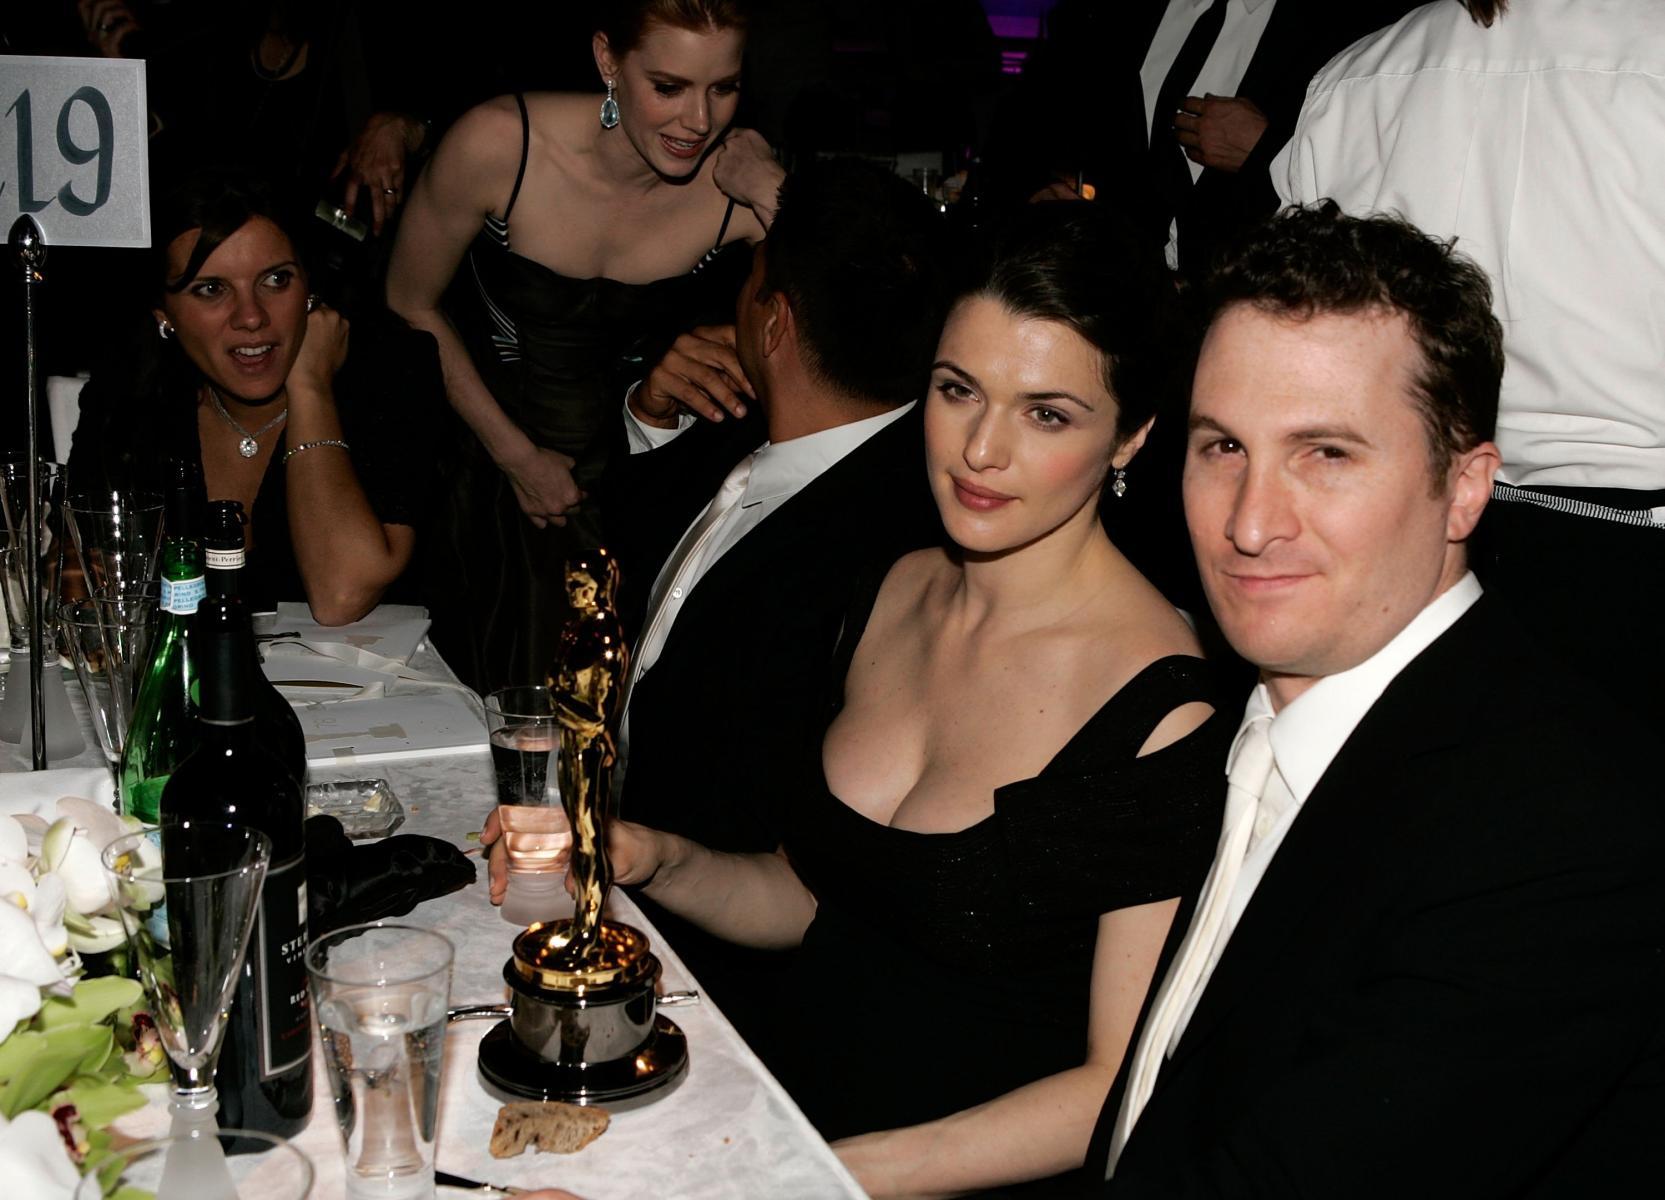 Rachel Weisz (with her Oscar) and her former partner Darren Aronofsky